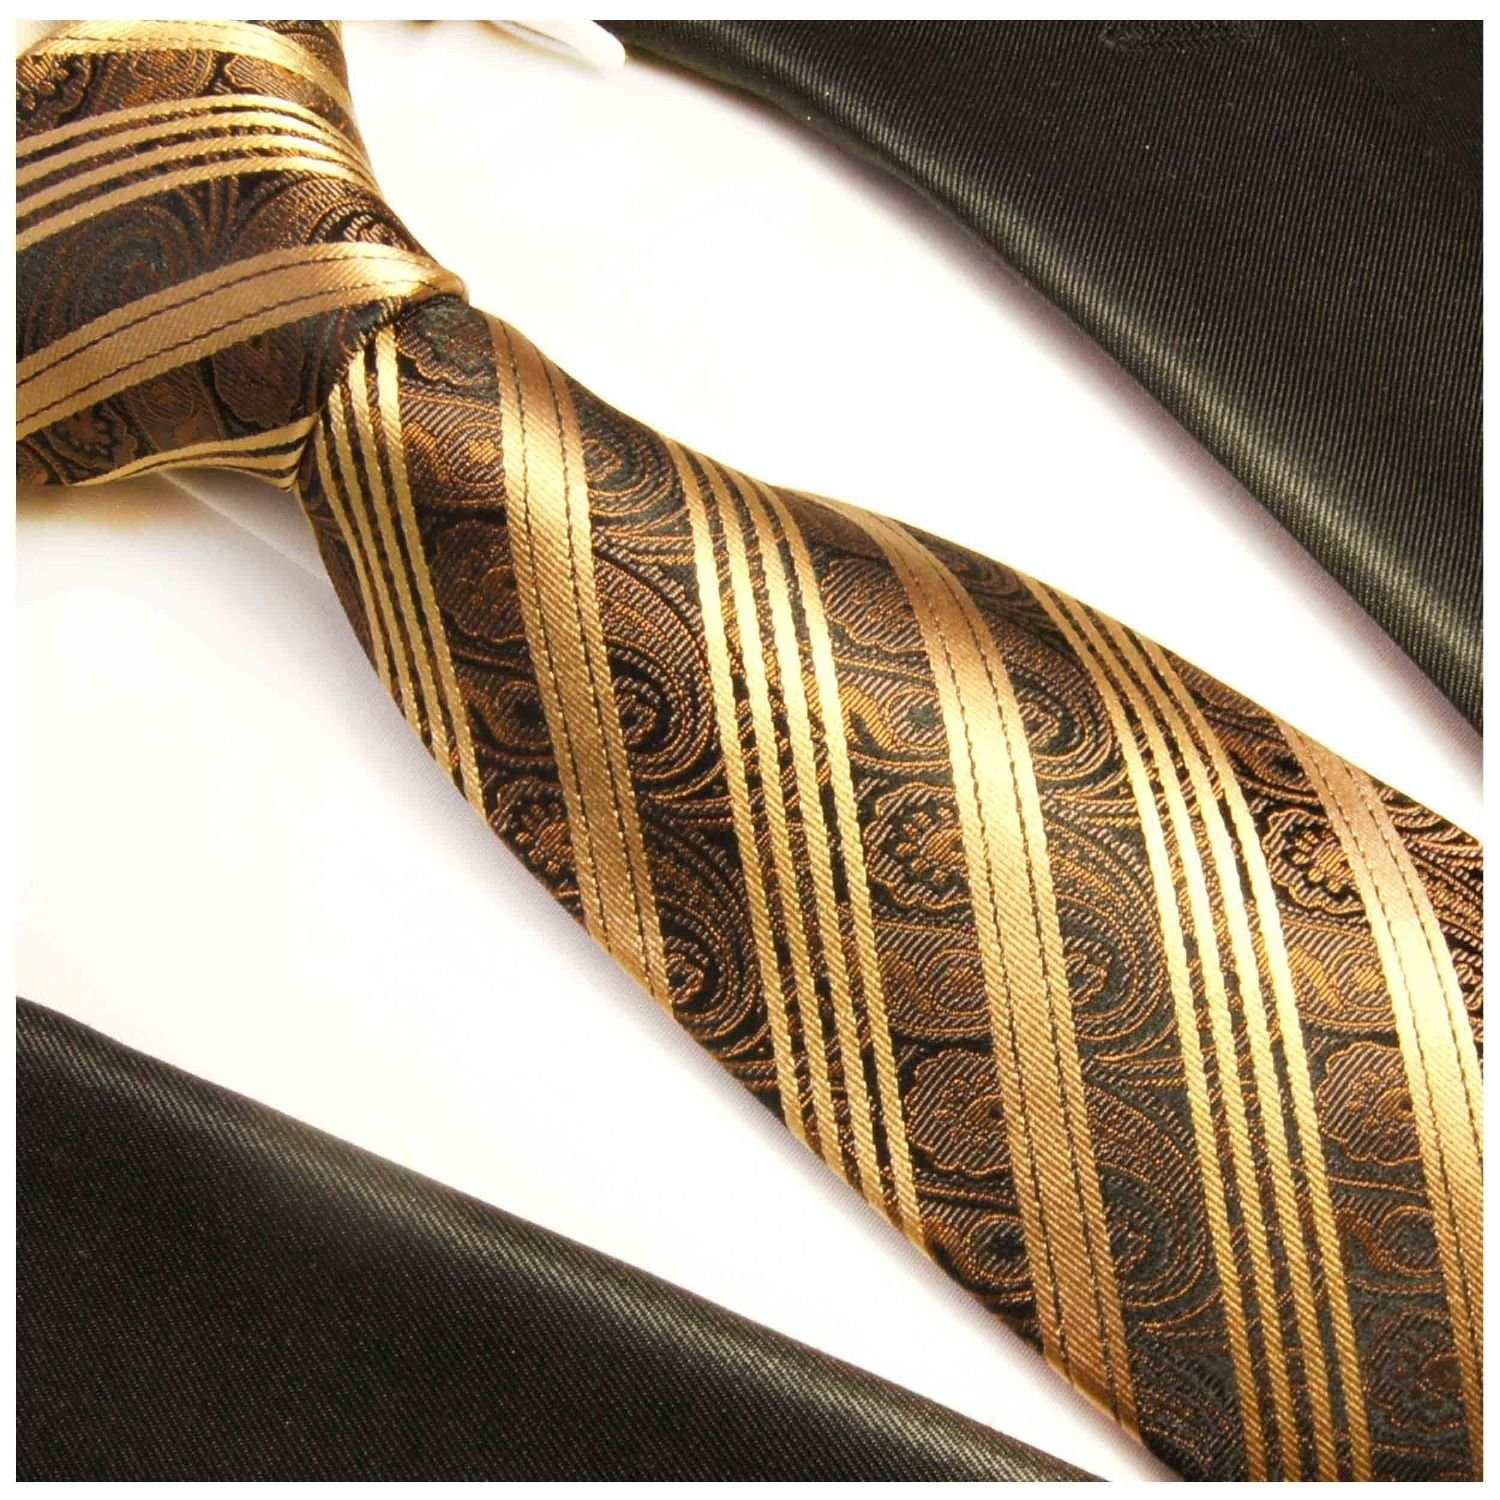 Paul Malone Krawatte 100% gestreift 388 gold paisley Elegante Schlips (6cm), braun Herren Schmal Seide Seidenkrawatte